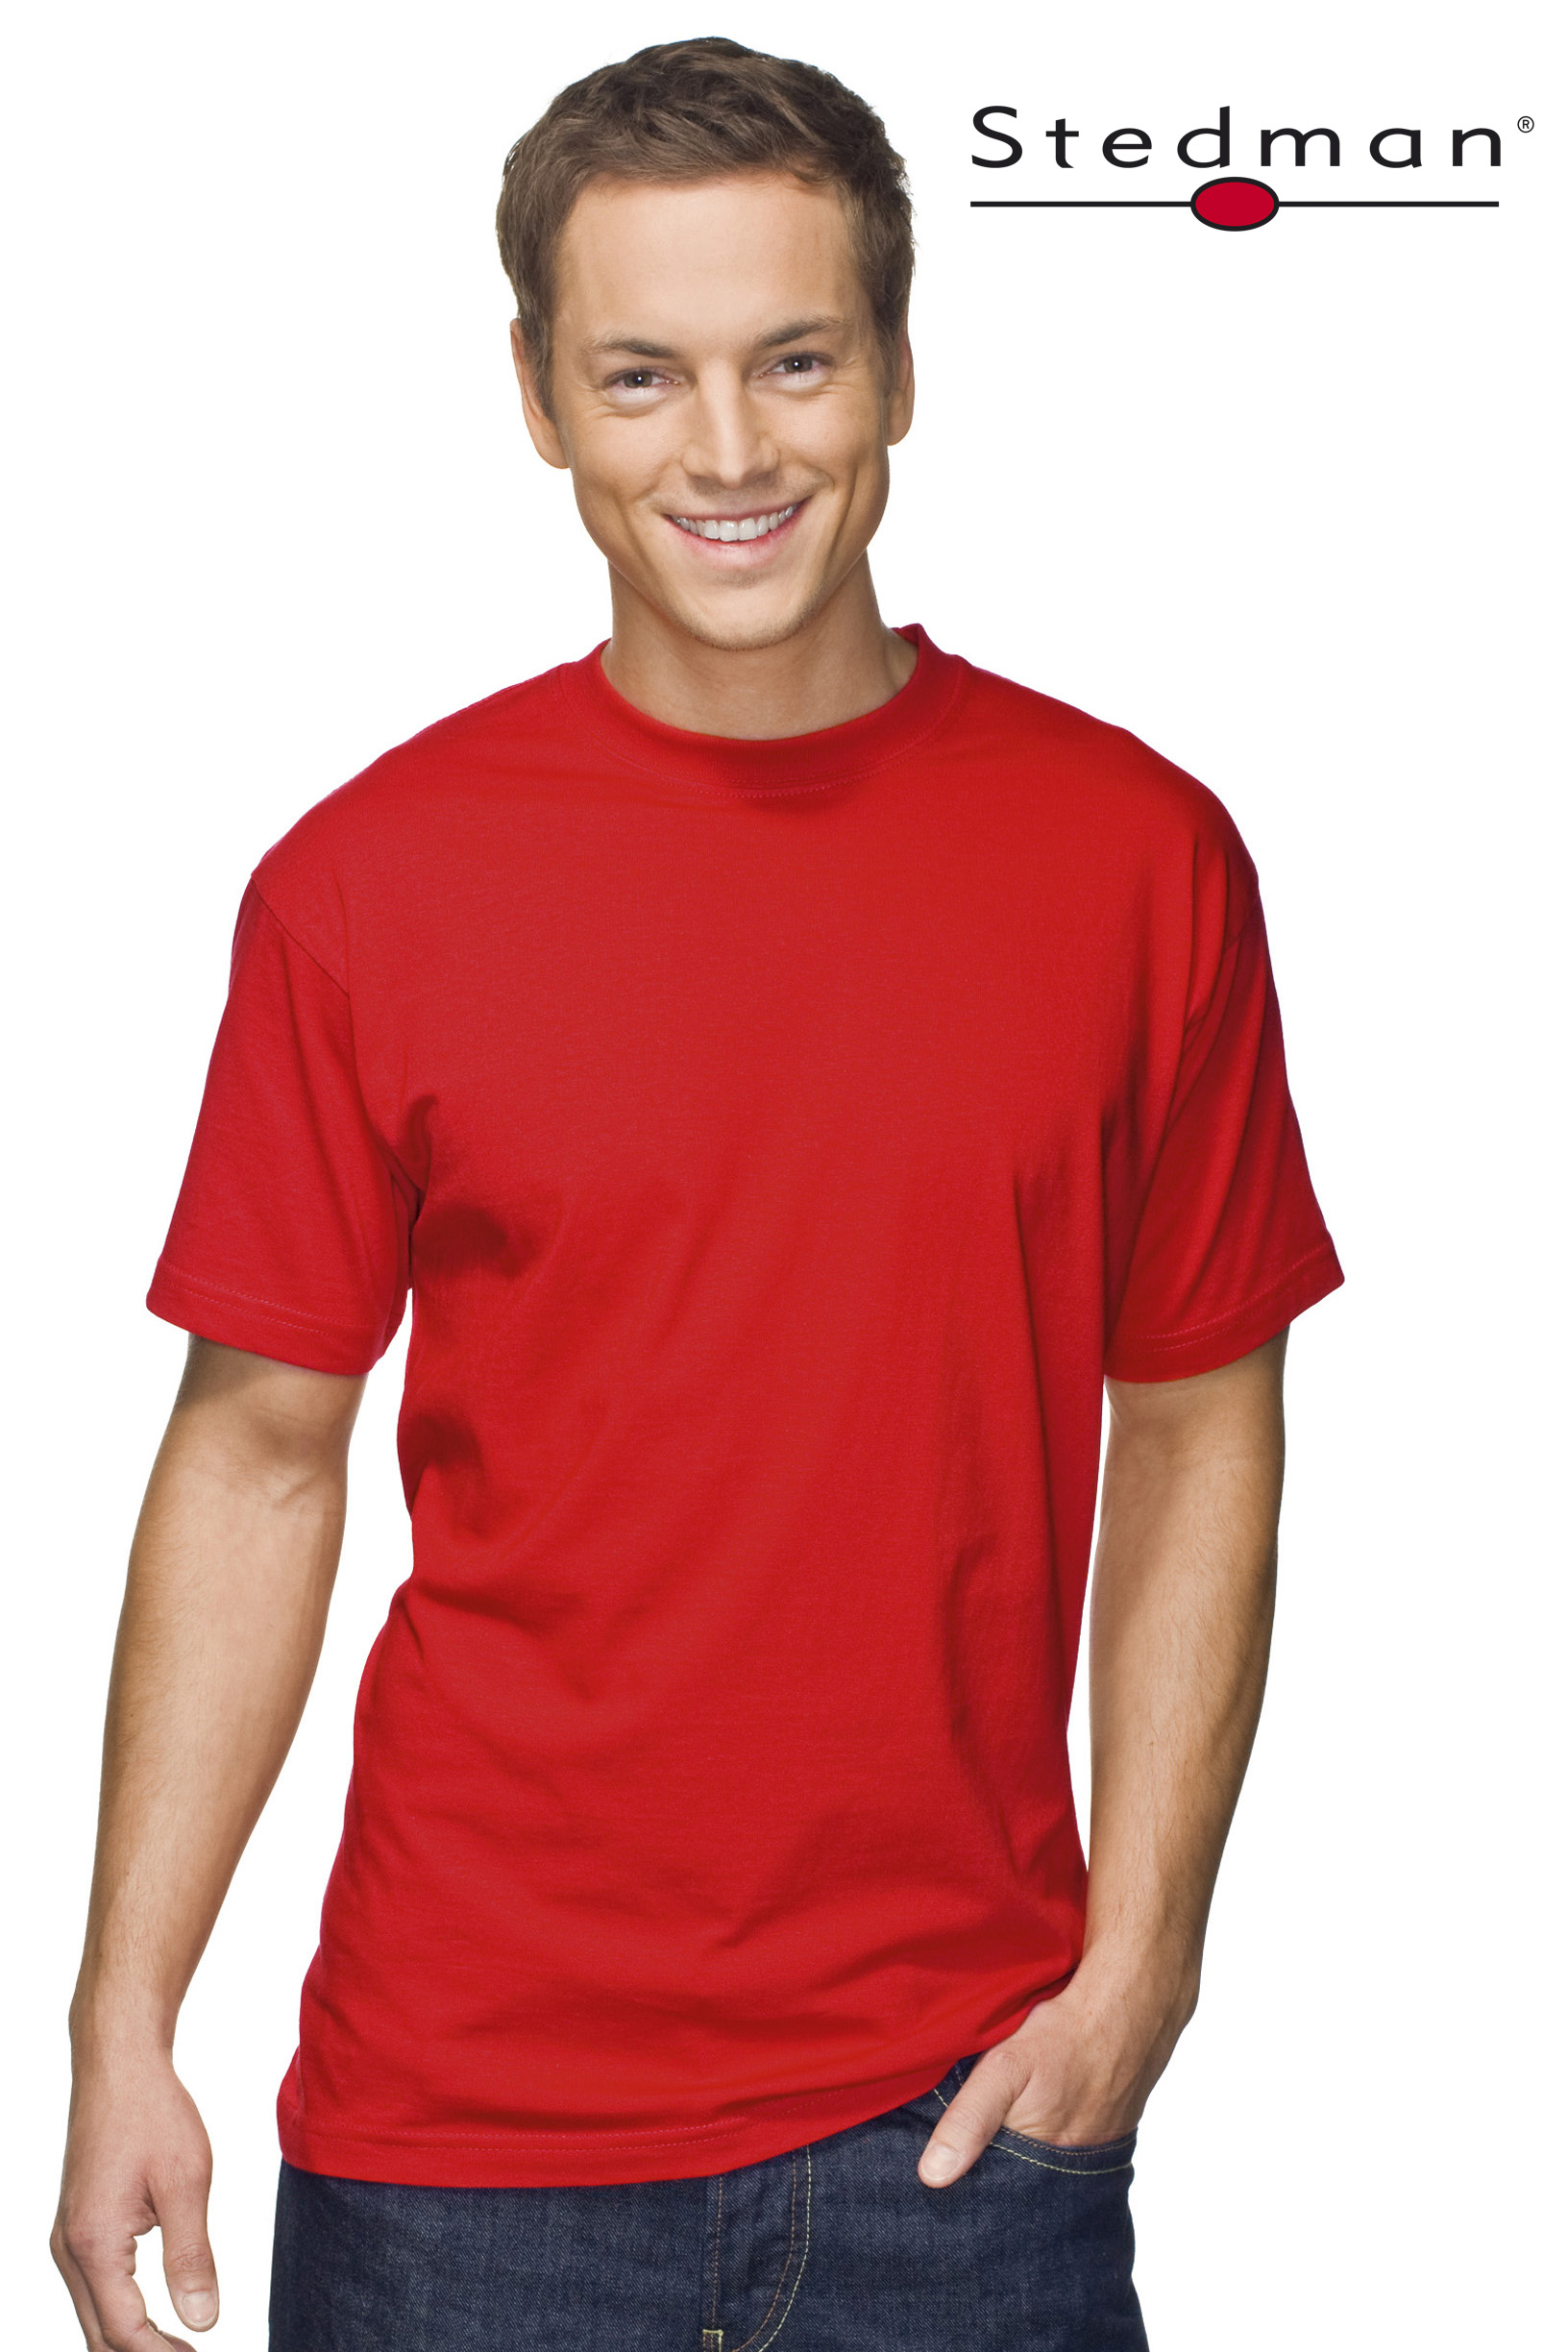 Unisex comfort T-shirt 185 grams